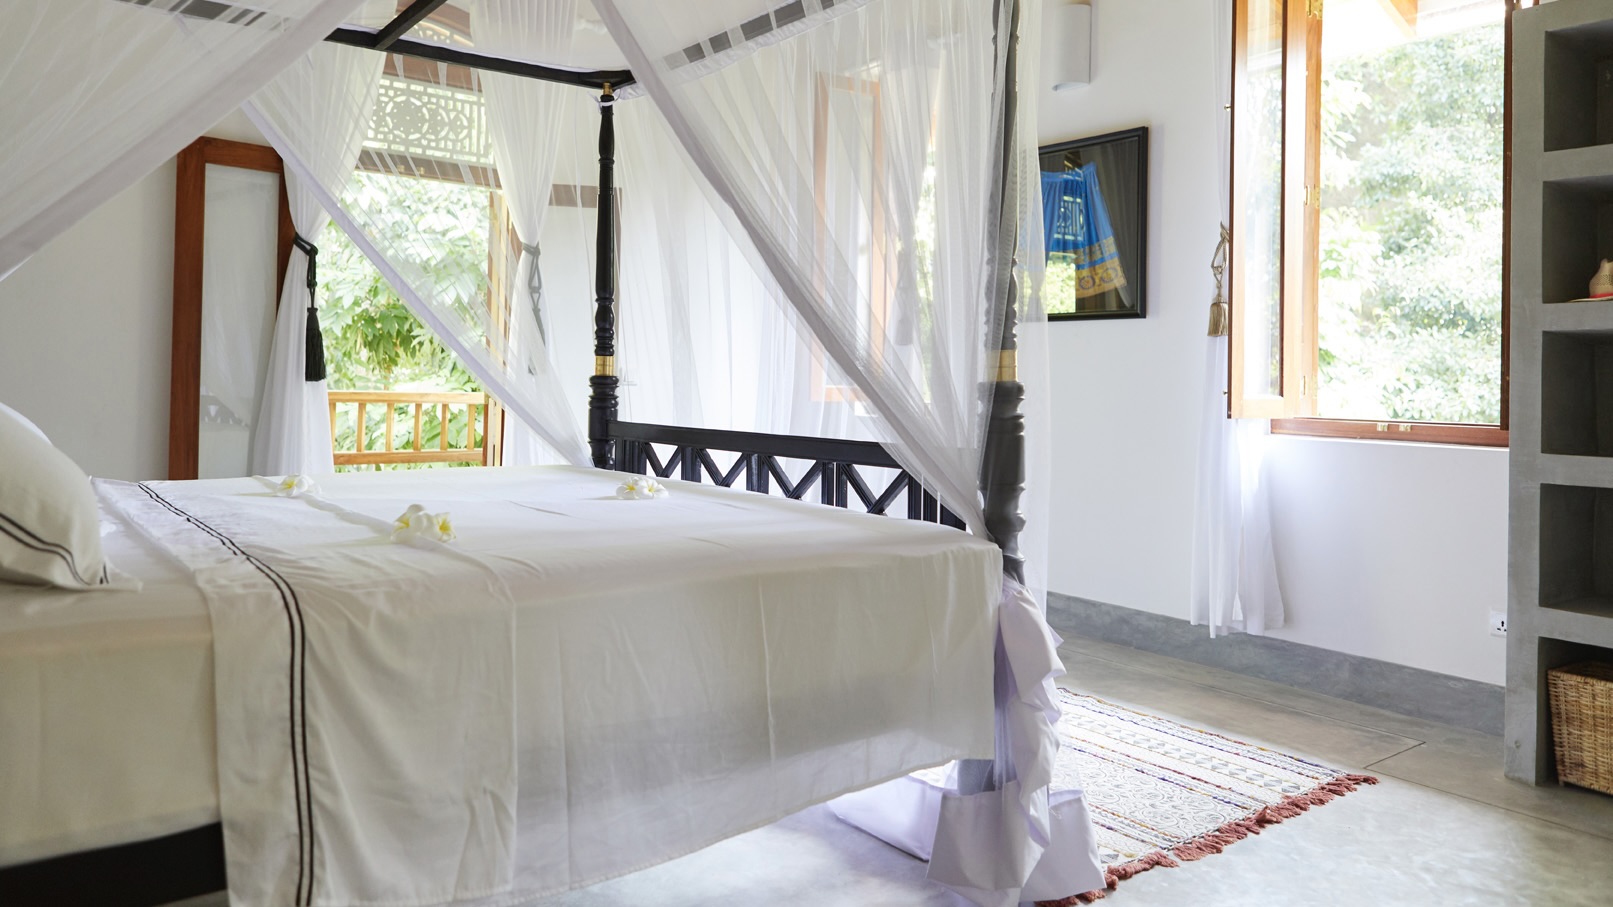 KalukandaHousebedroom at one of the top Sri Lankan Retreats